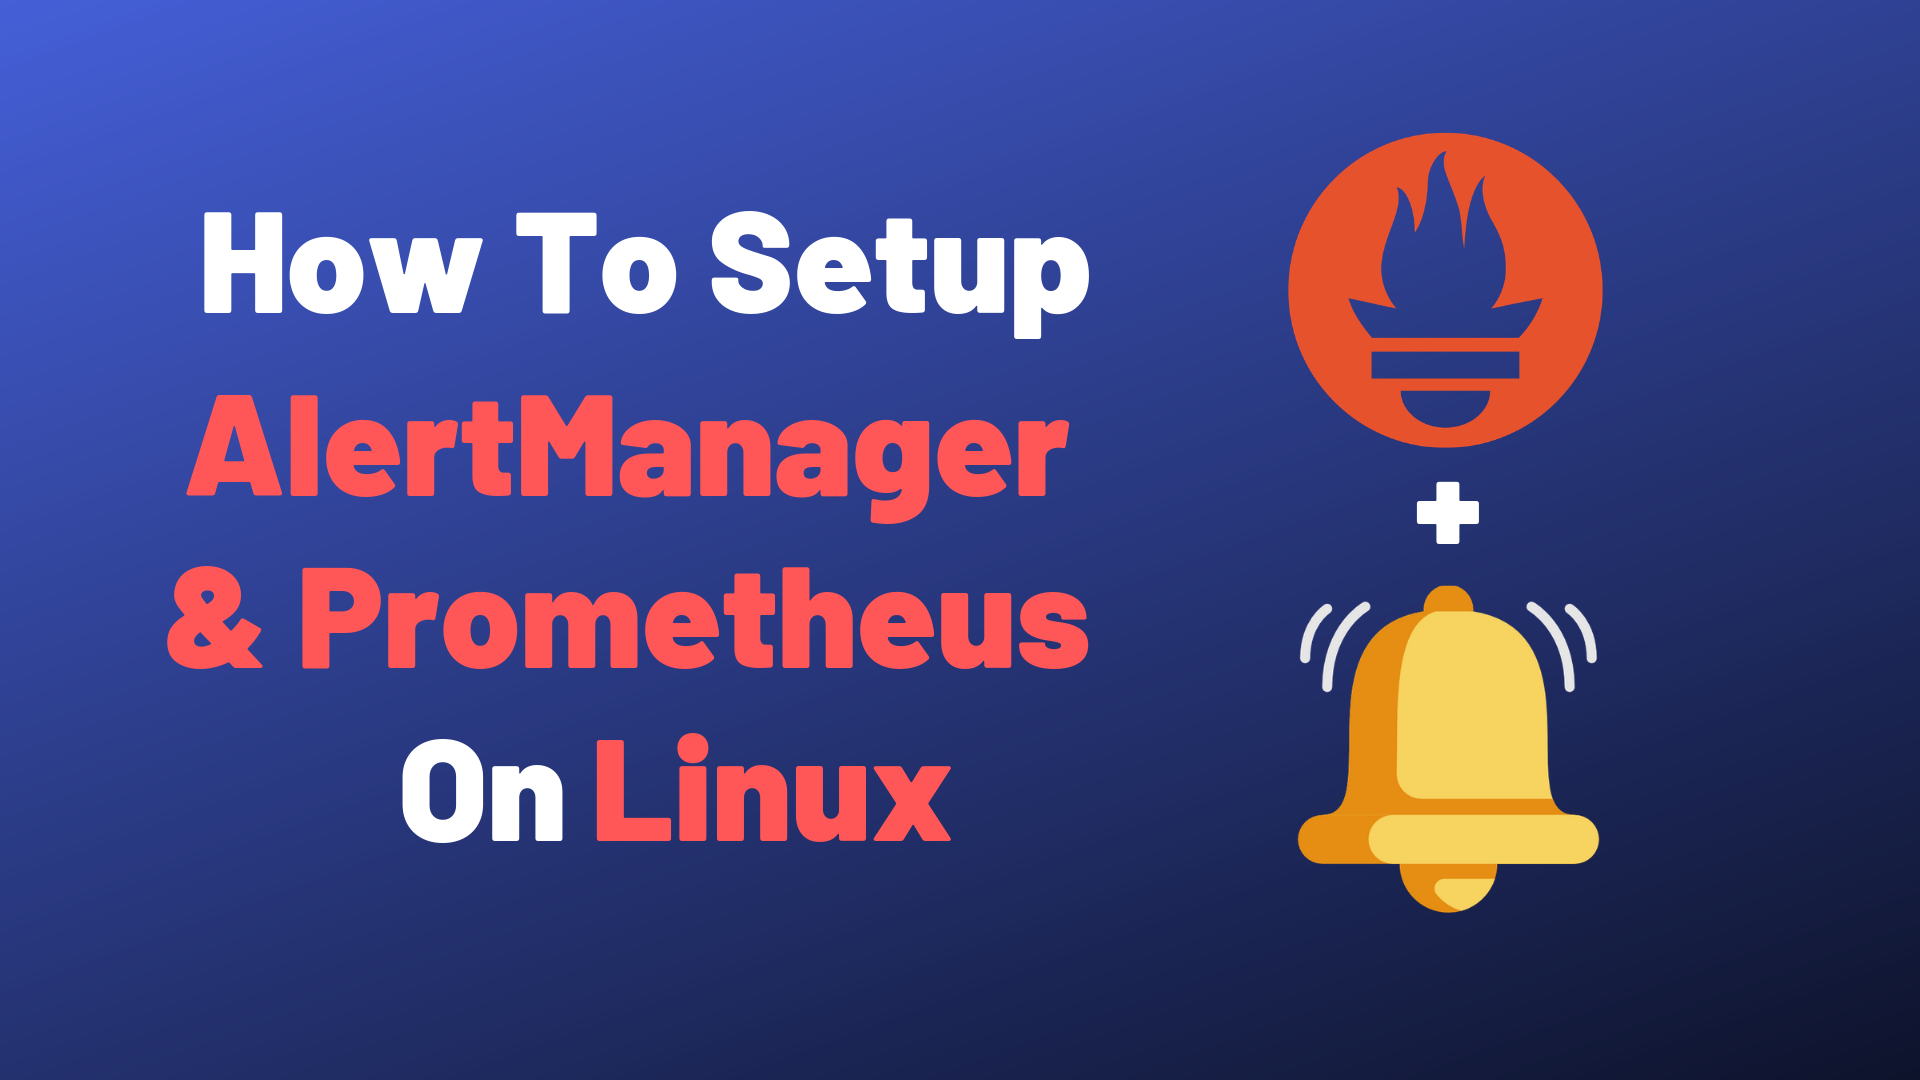 AlertManager and Prometheus Complete Setup on Linux